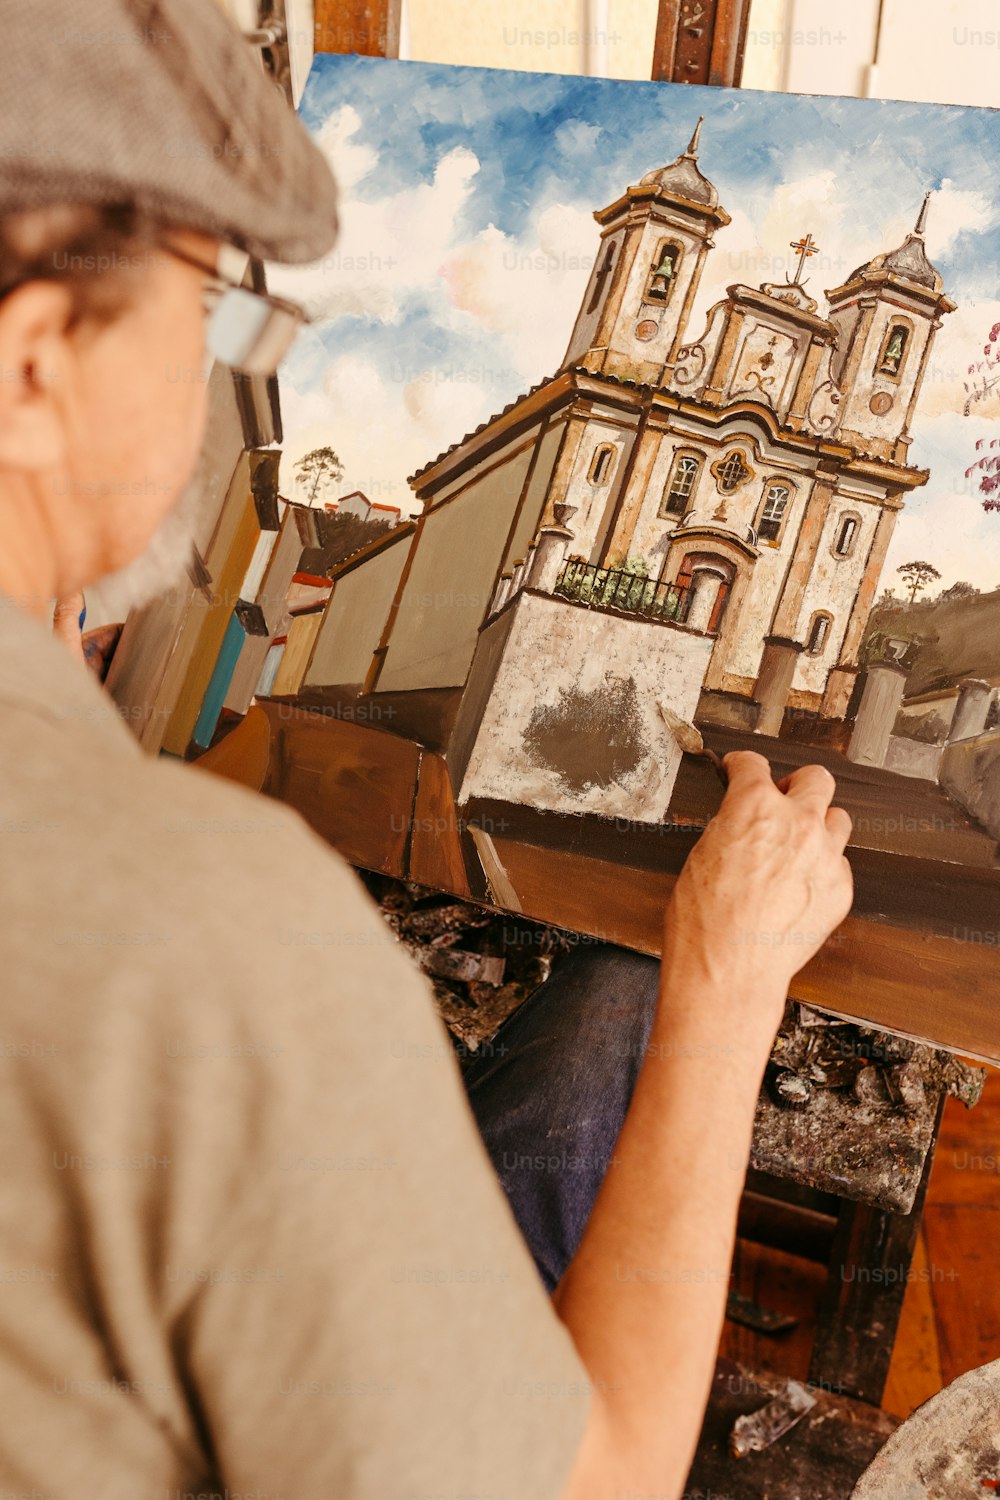 Un hombre está pintando un cuadro de una iglesia